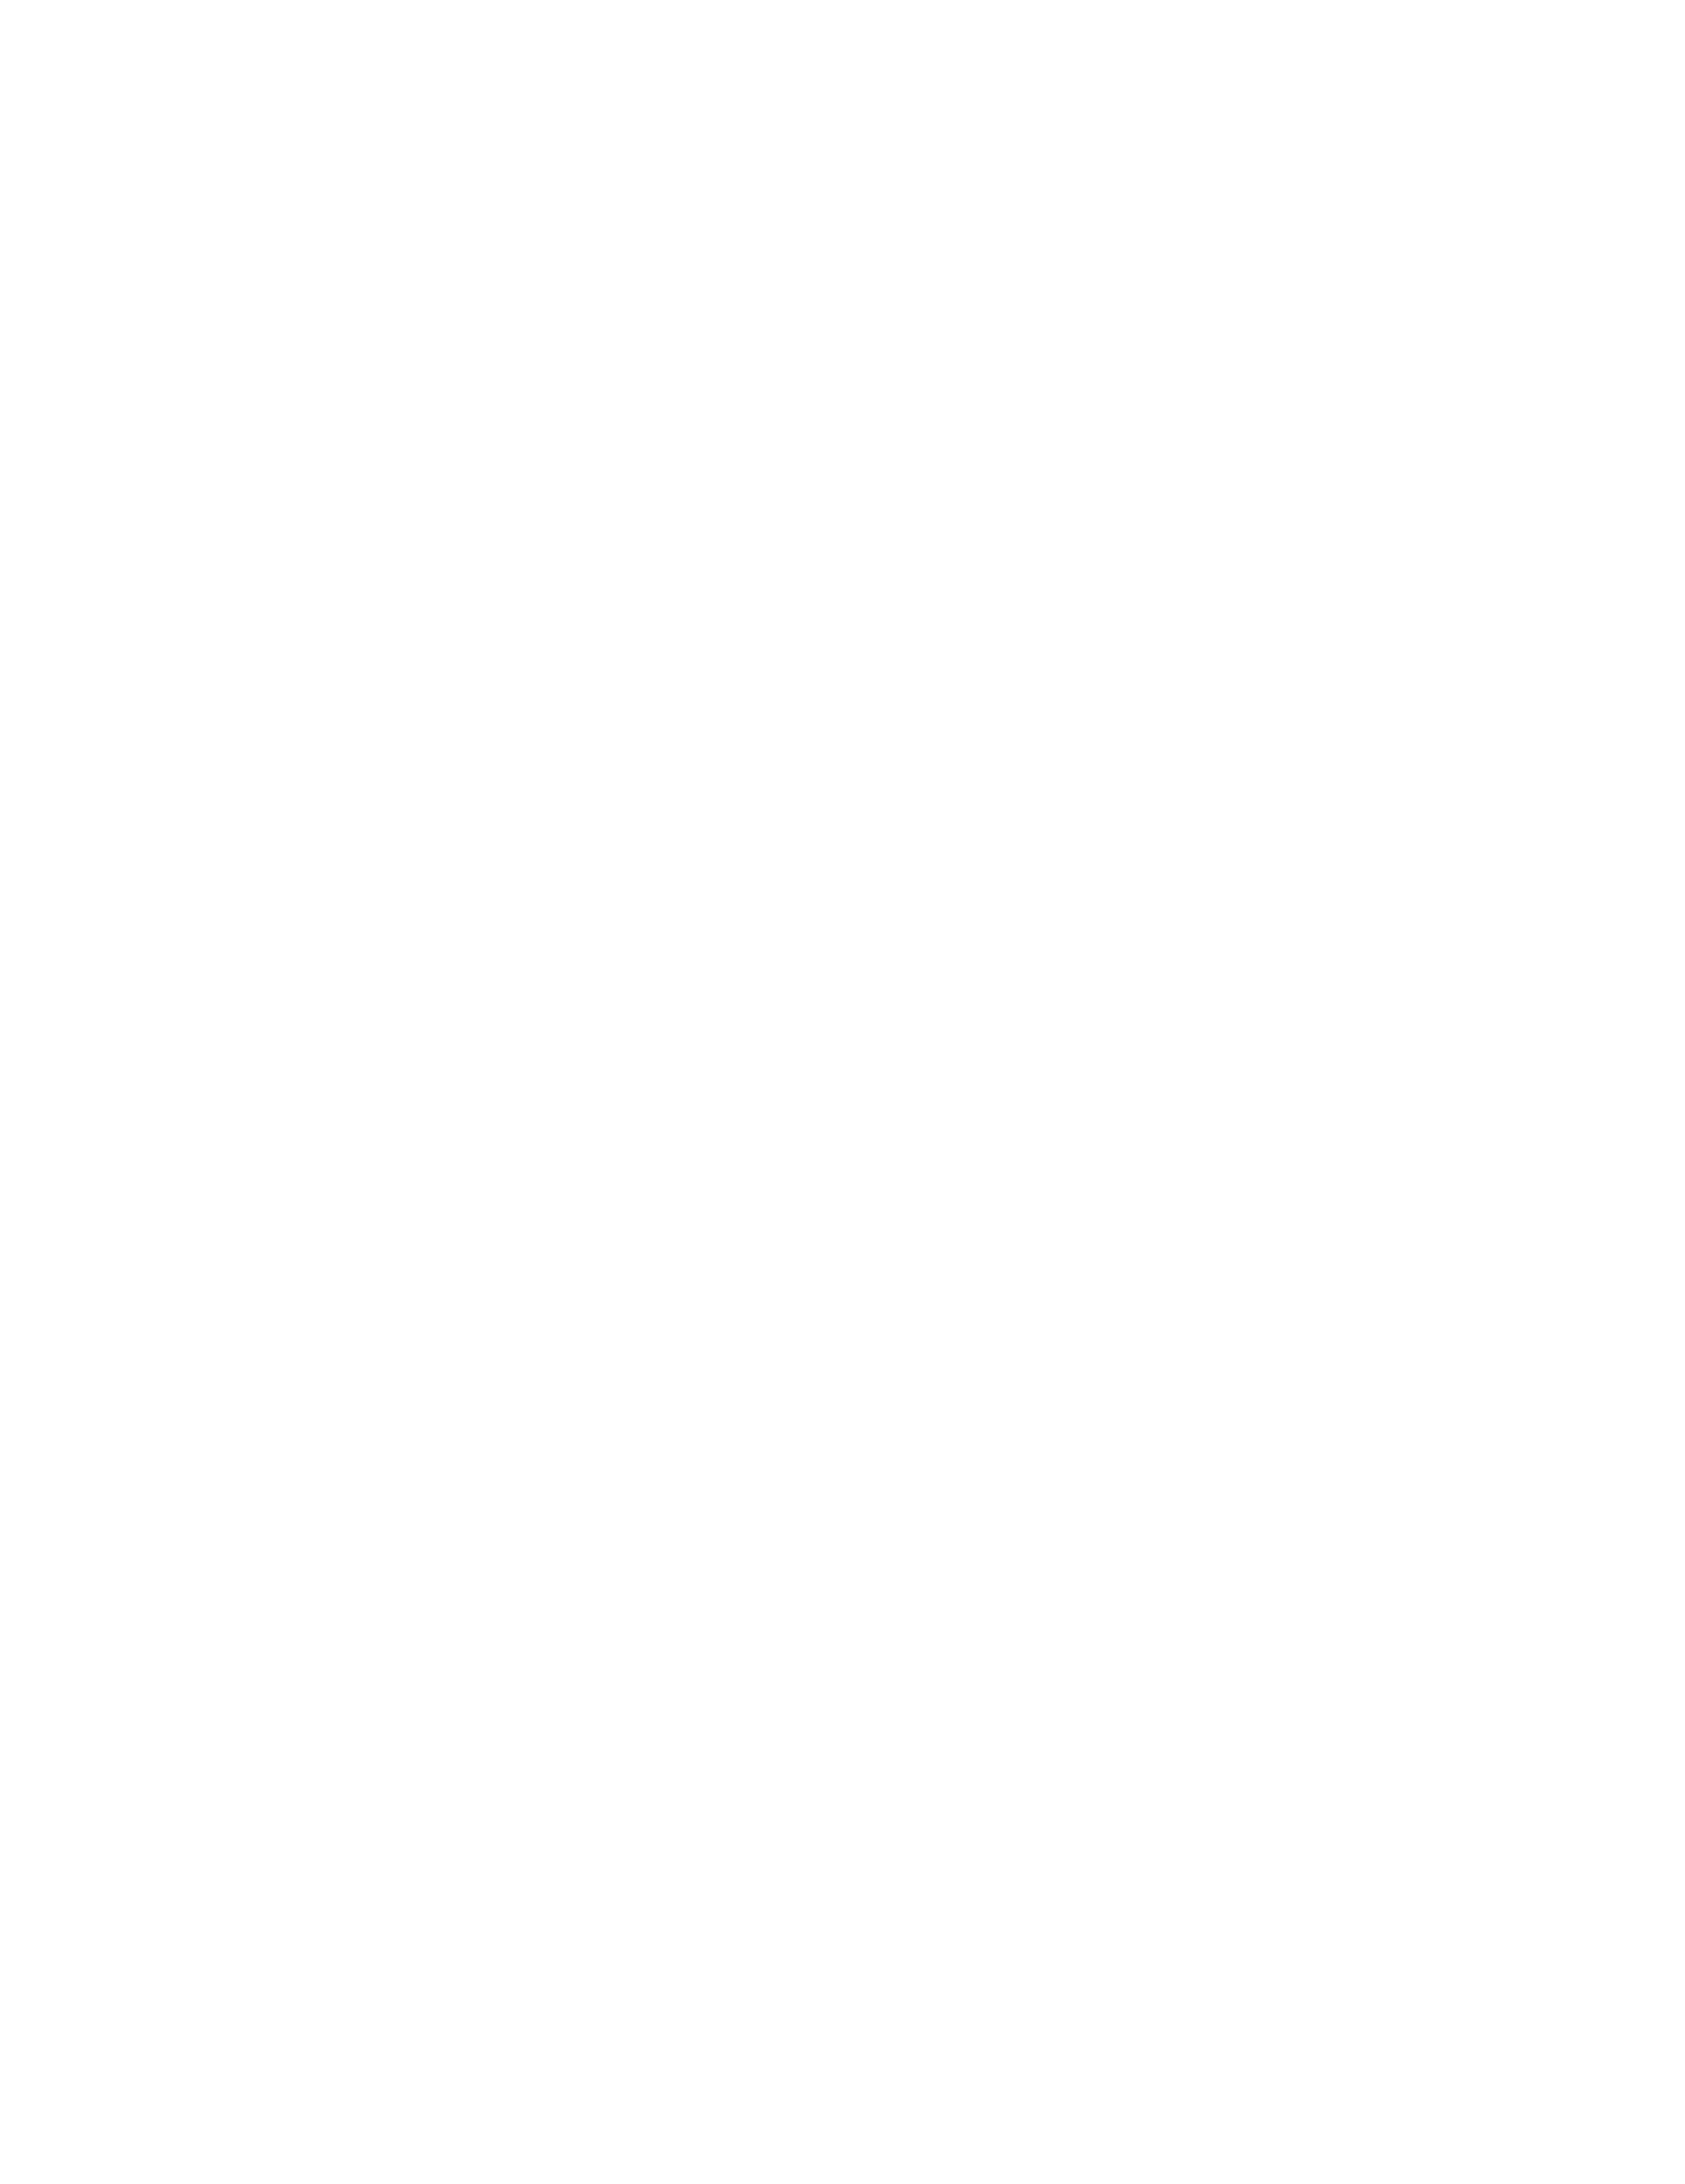 1st Phorm Legionnaire Program